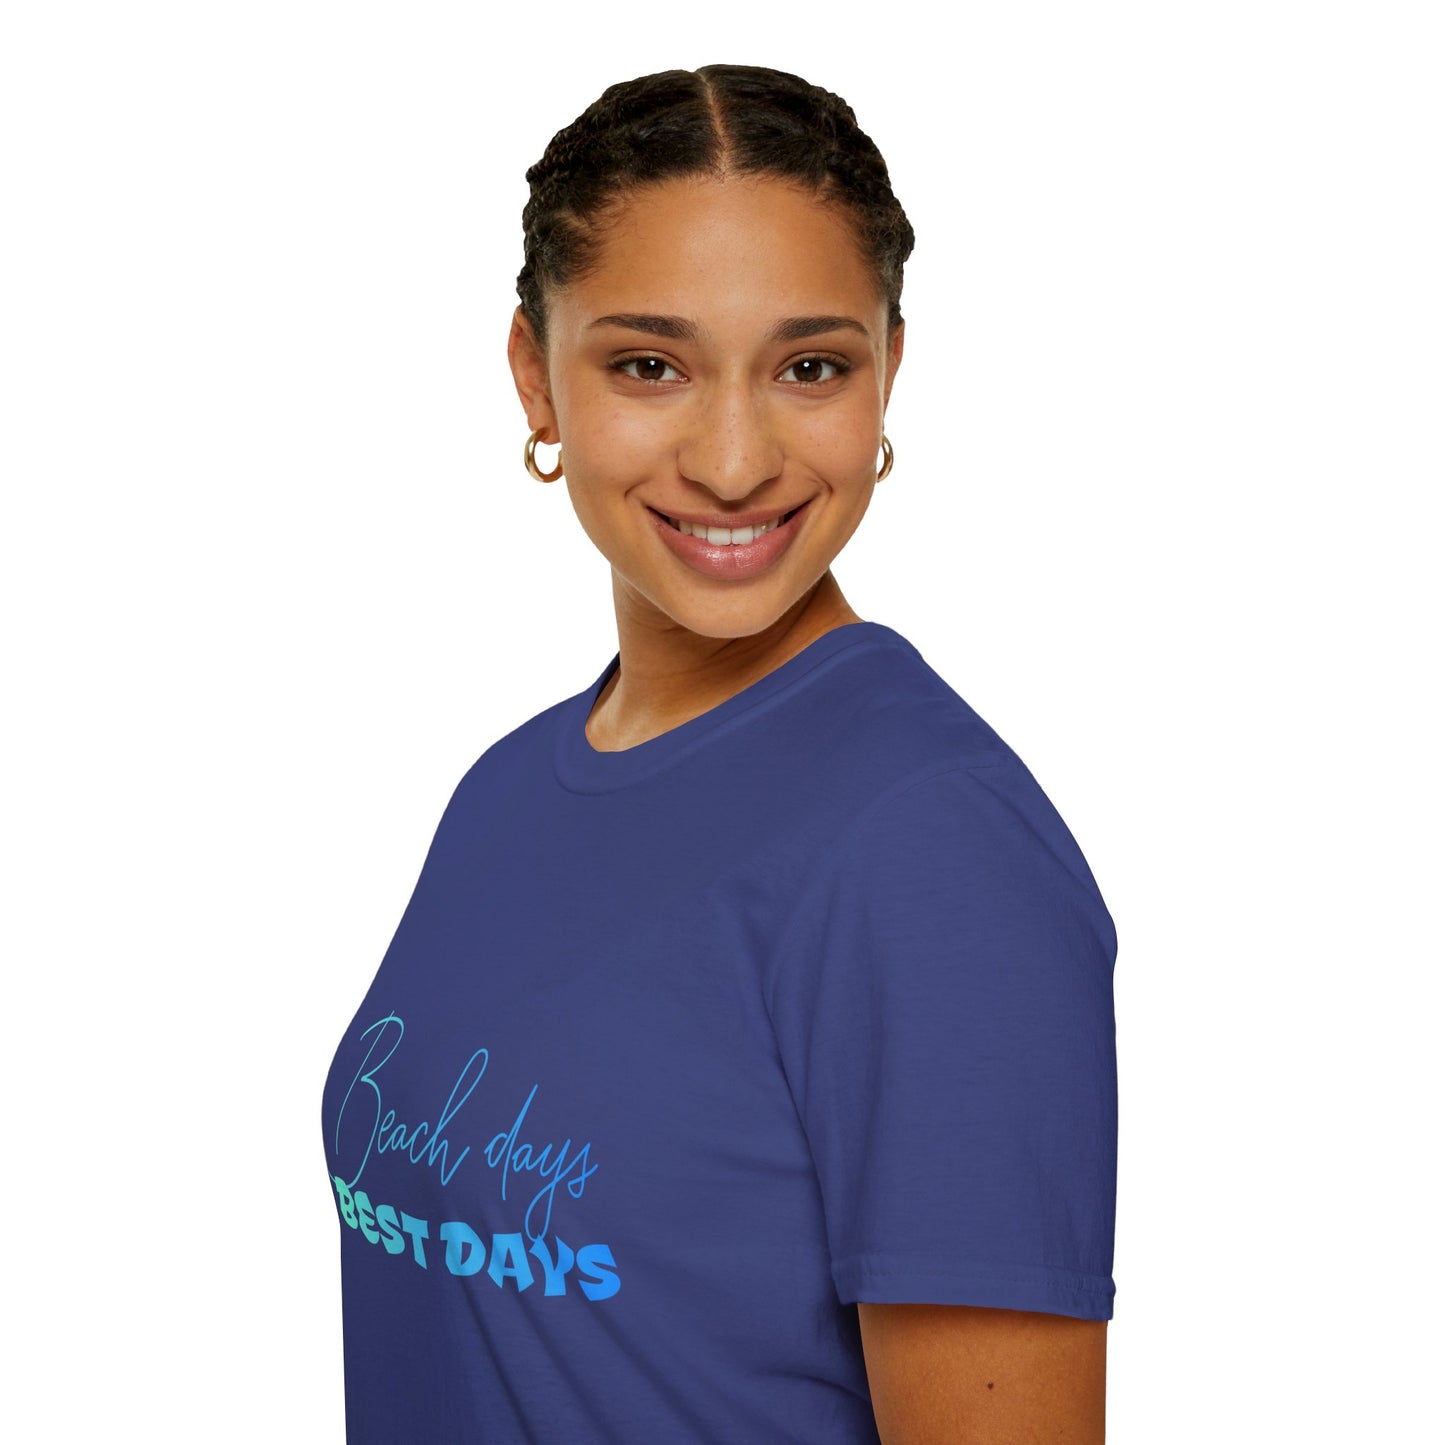 Trendmelo Women's Graphic Tee with Beach Days Best Days Print, Beach T Shirt for Women